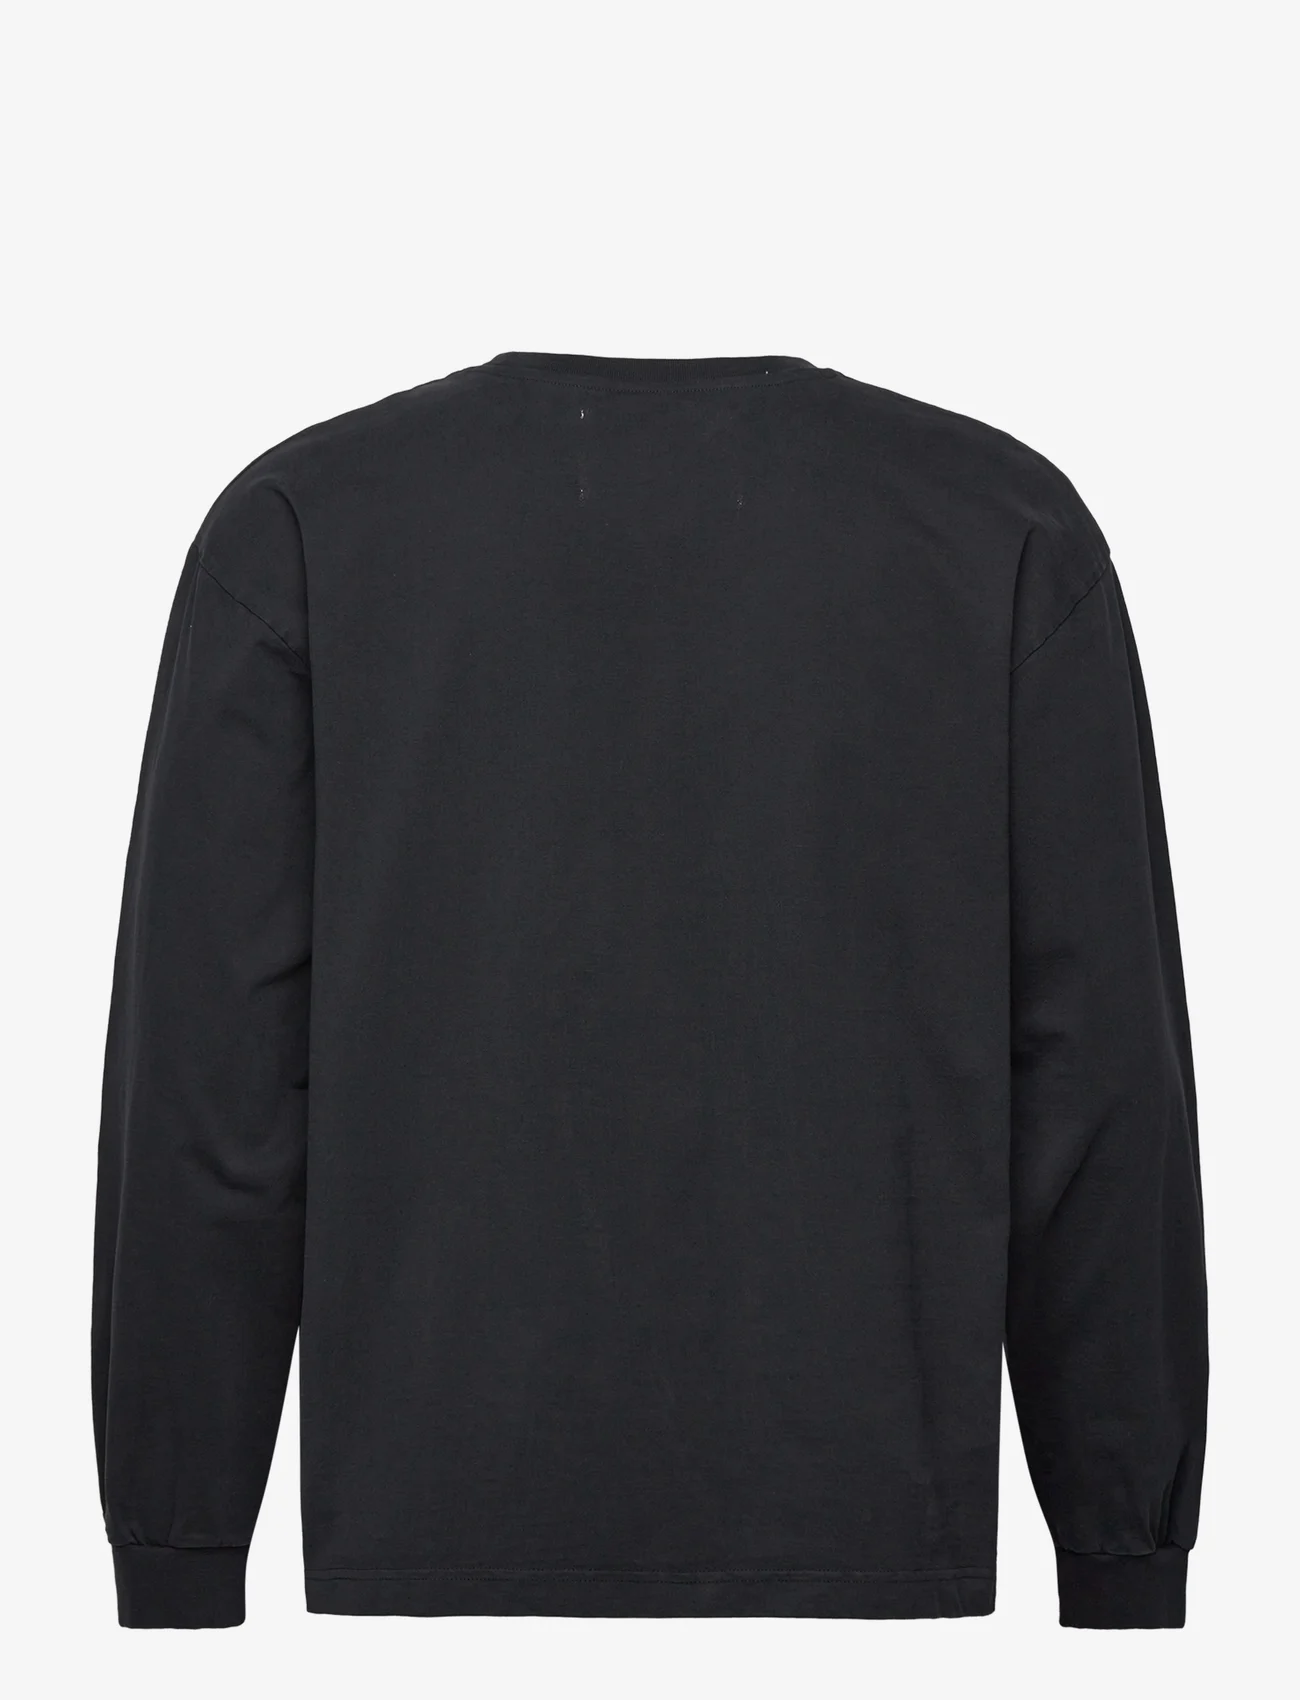 Garment Project - Heavy L/S Tee - Black - langærmede t-shirts - black - 1